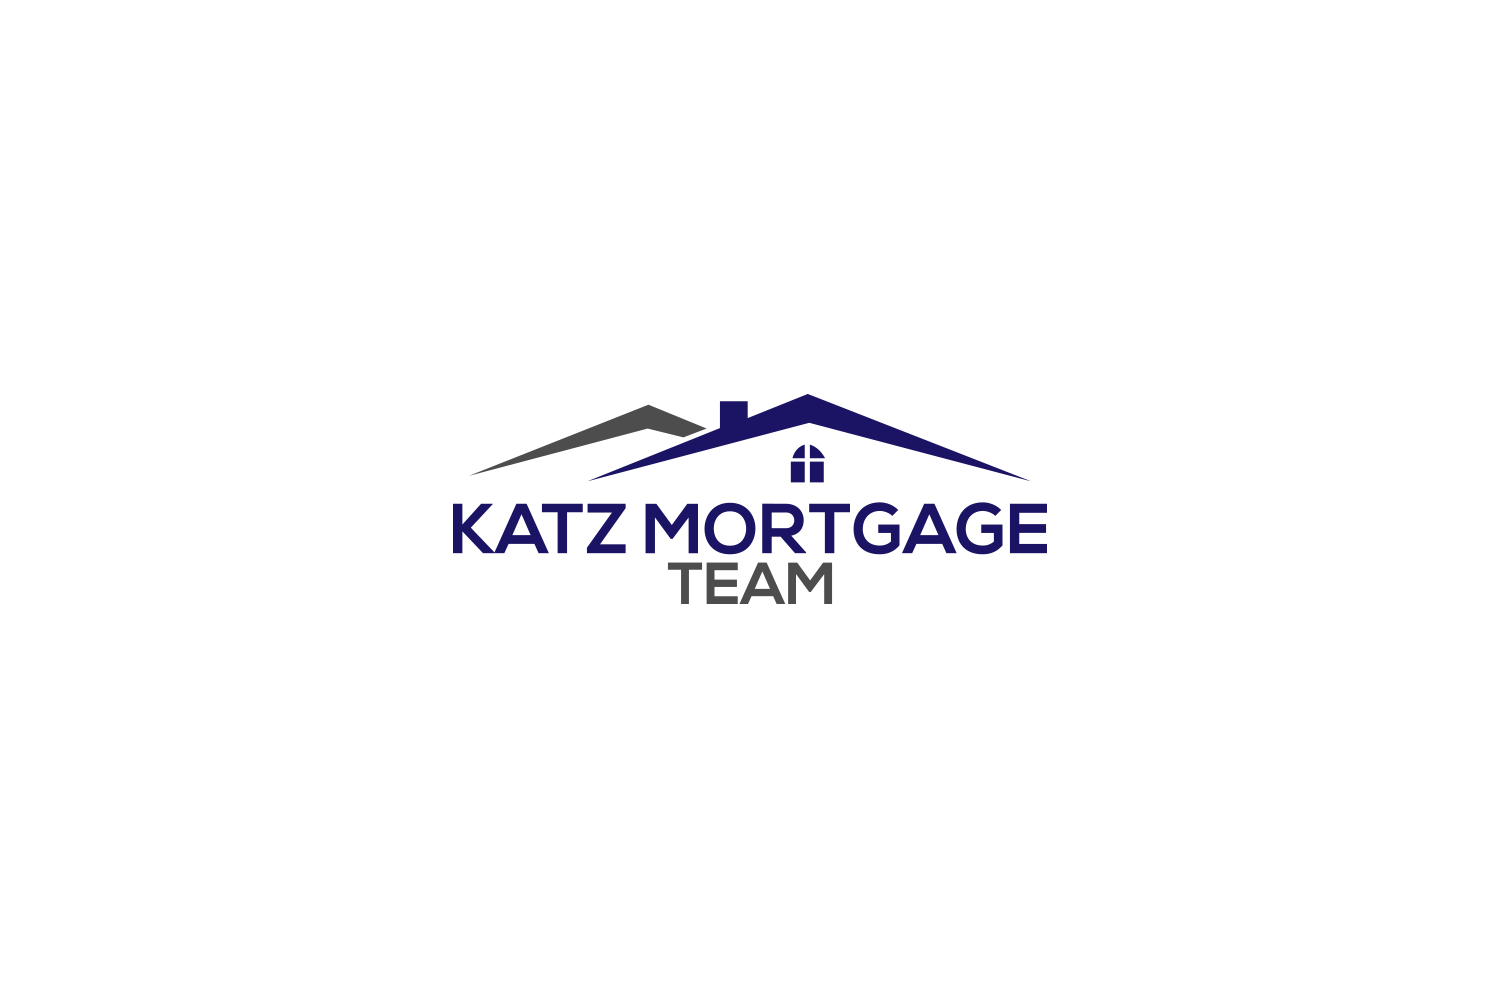 Katz Mortgage Team - Stephen Katz